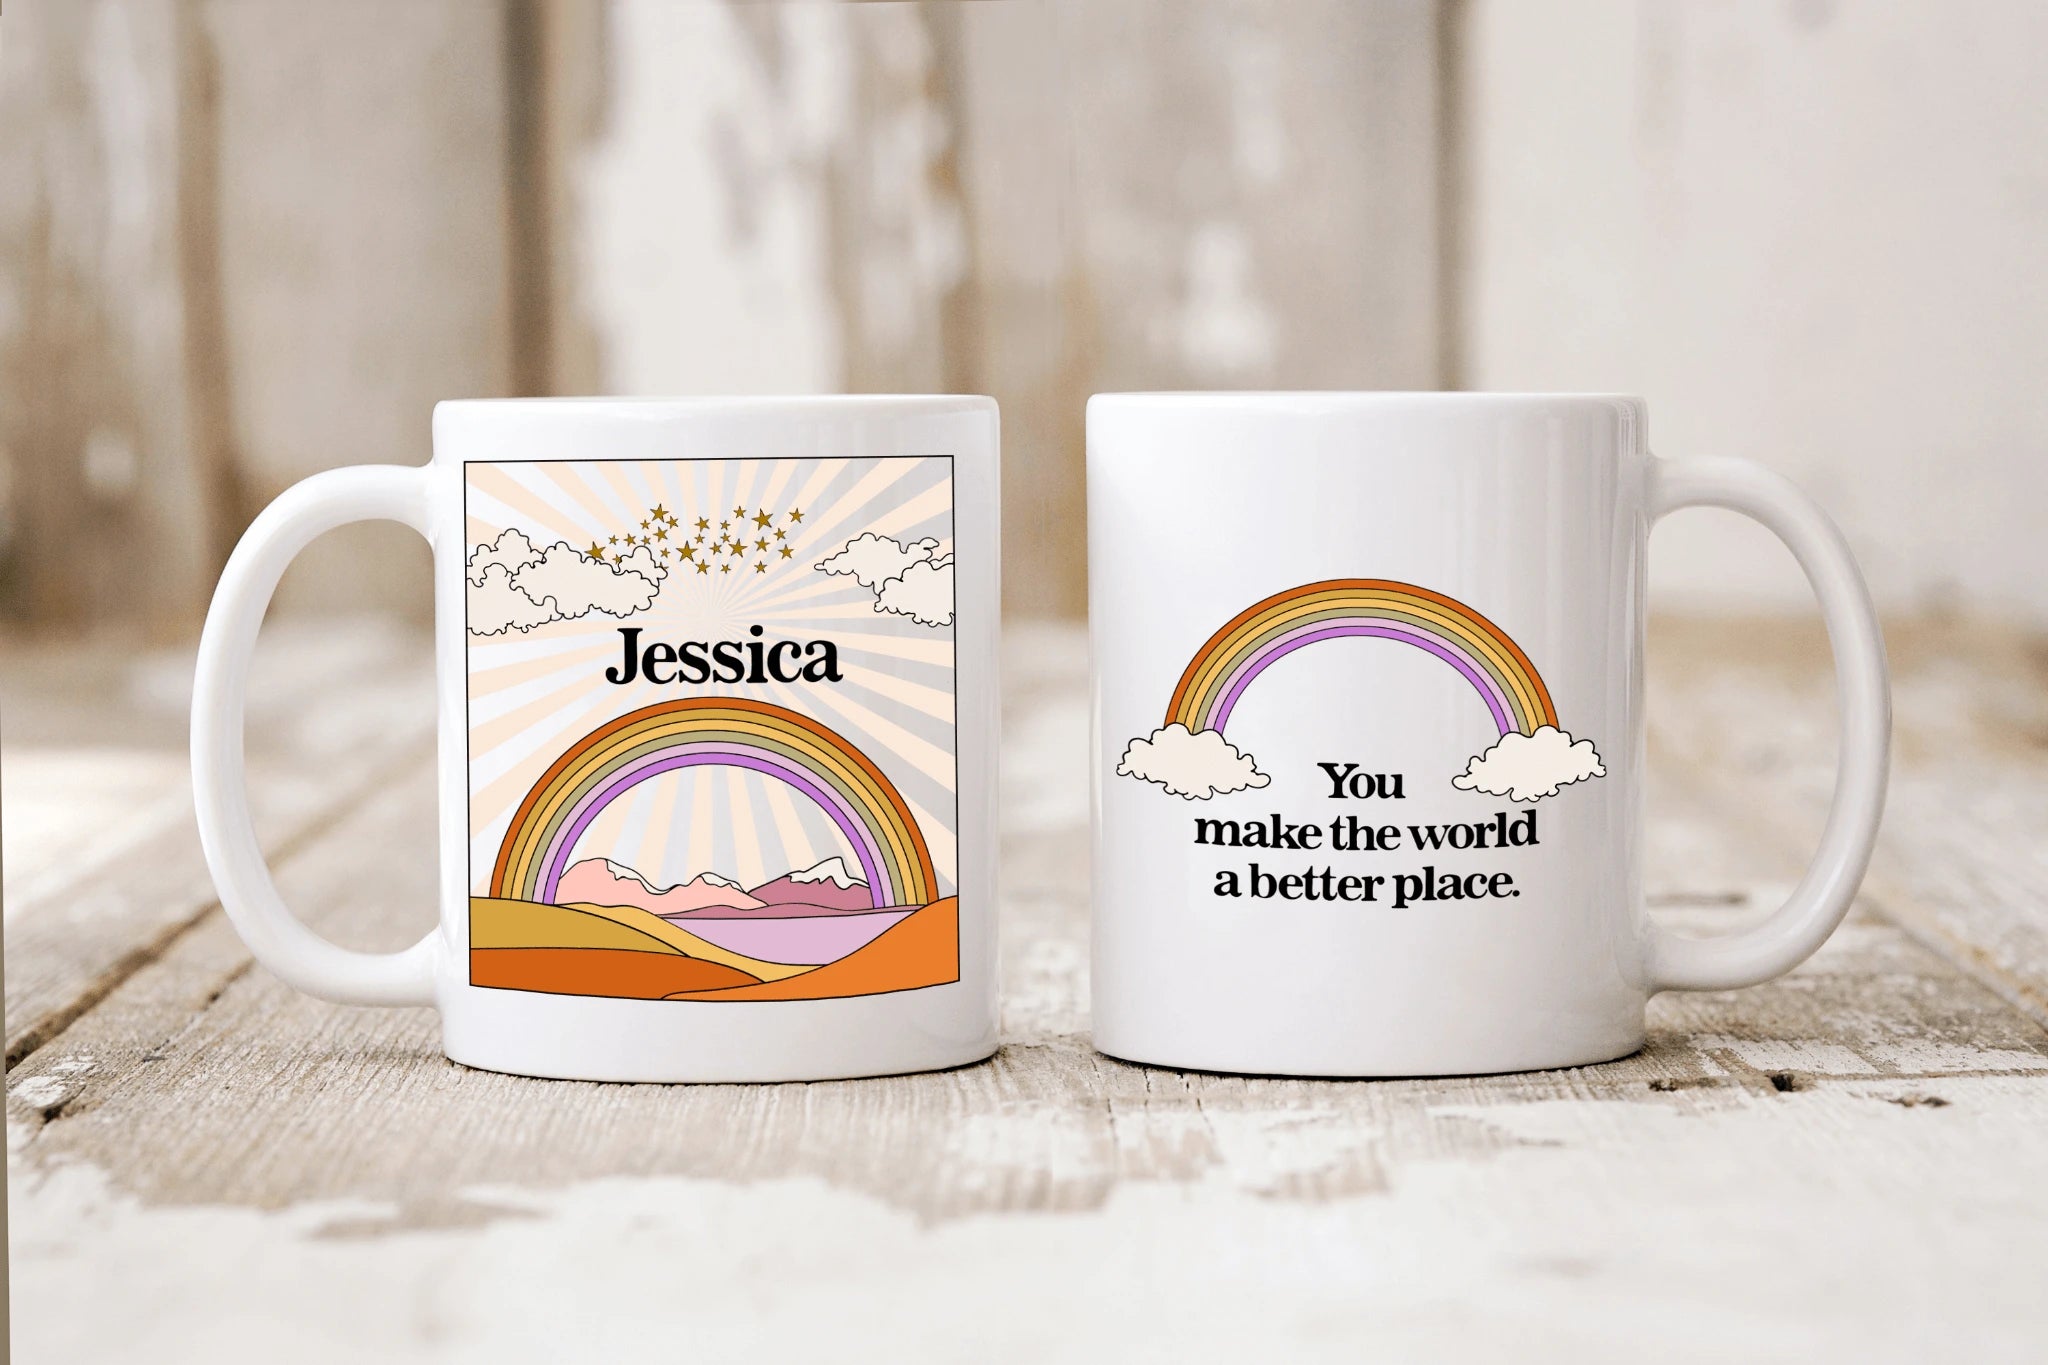 You make the world a better place - personalized ceramic mug